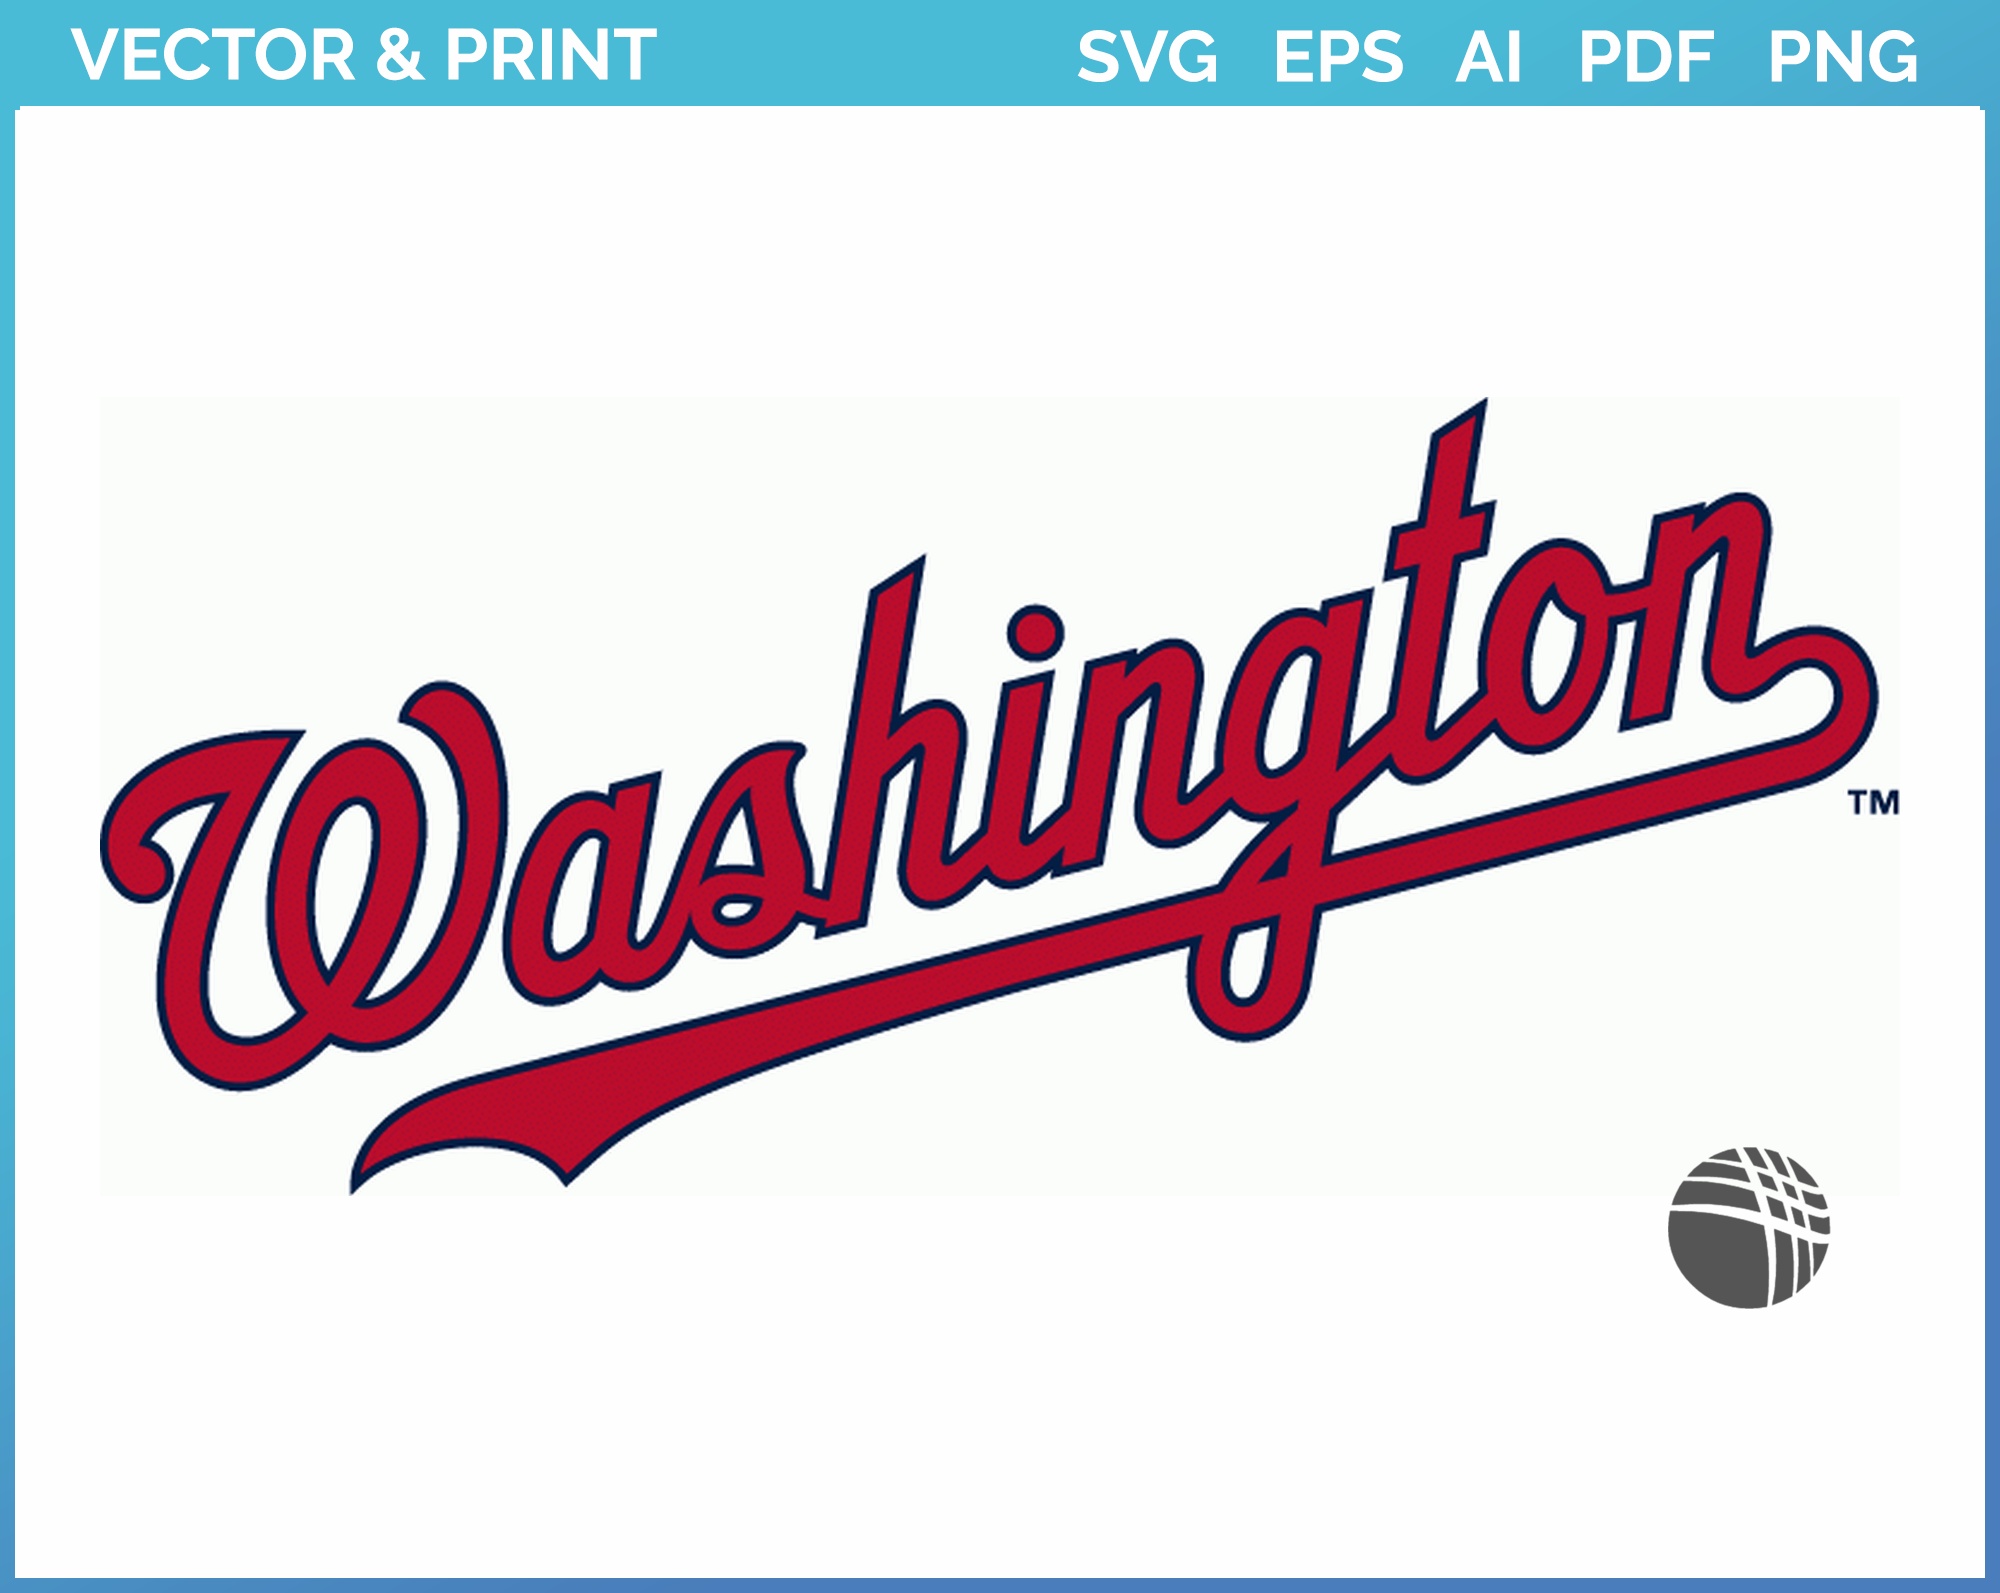 Washington Nationals SVG • MLB Baseball Team T-shirt Design SVG